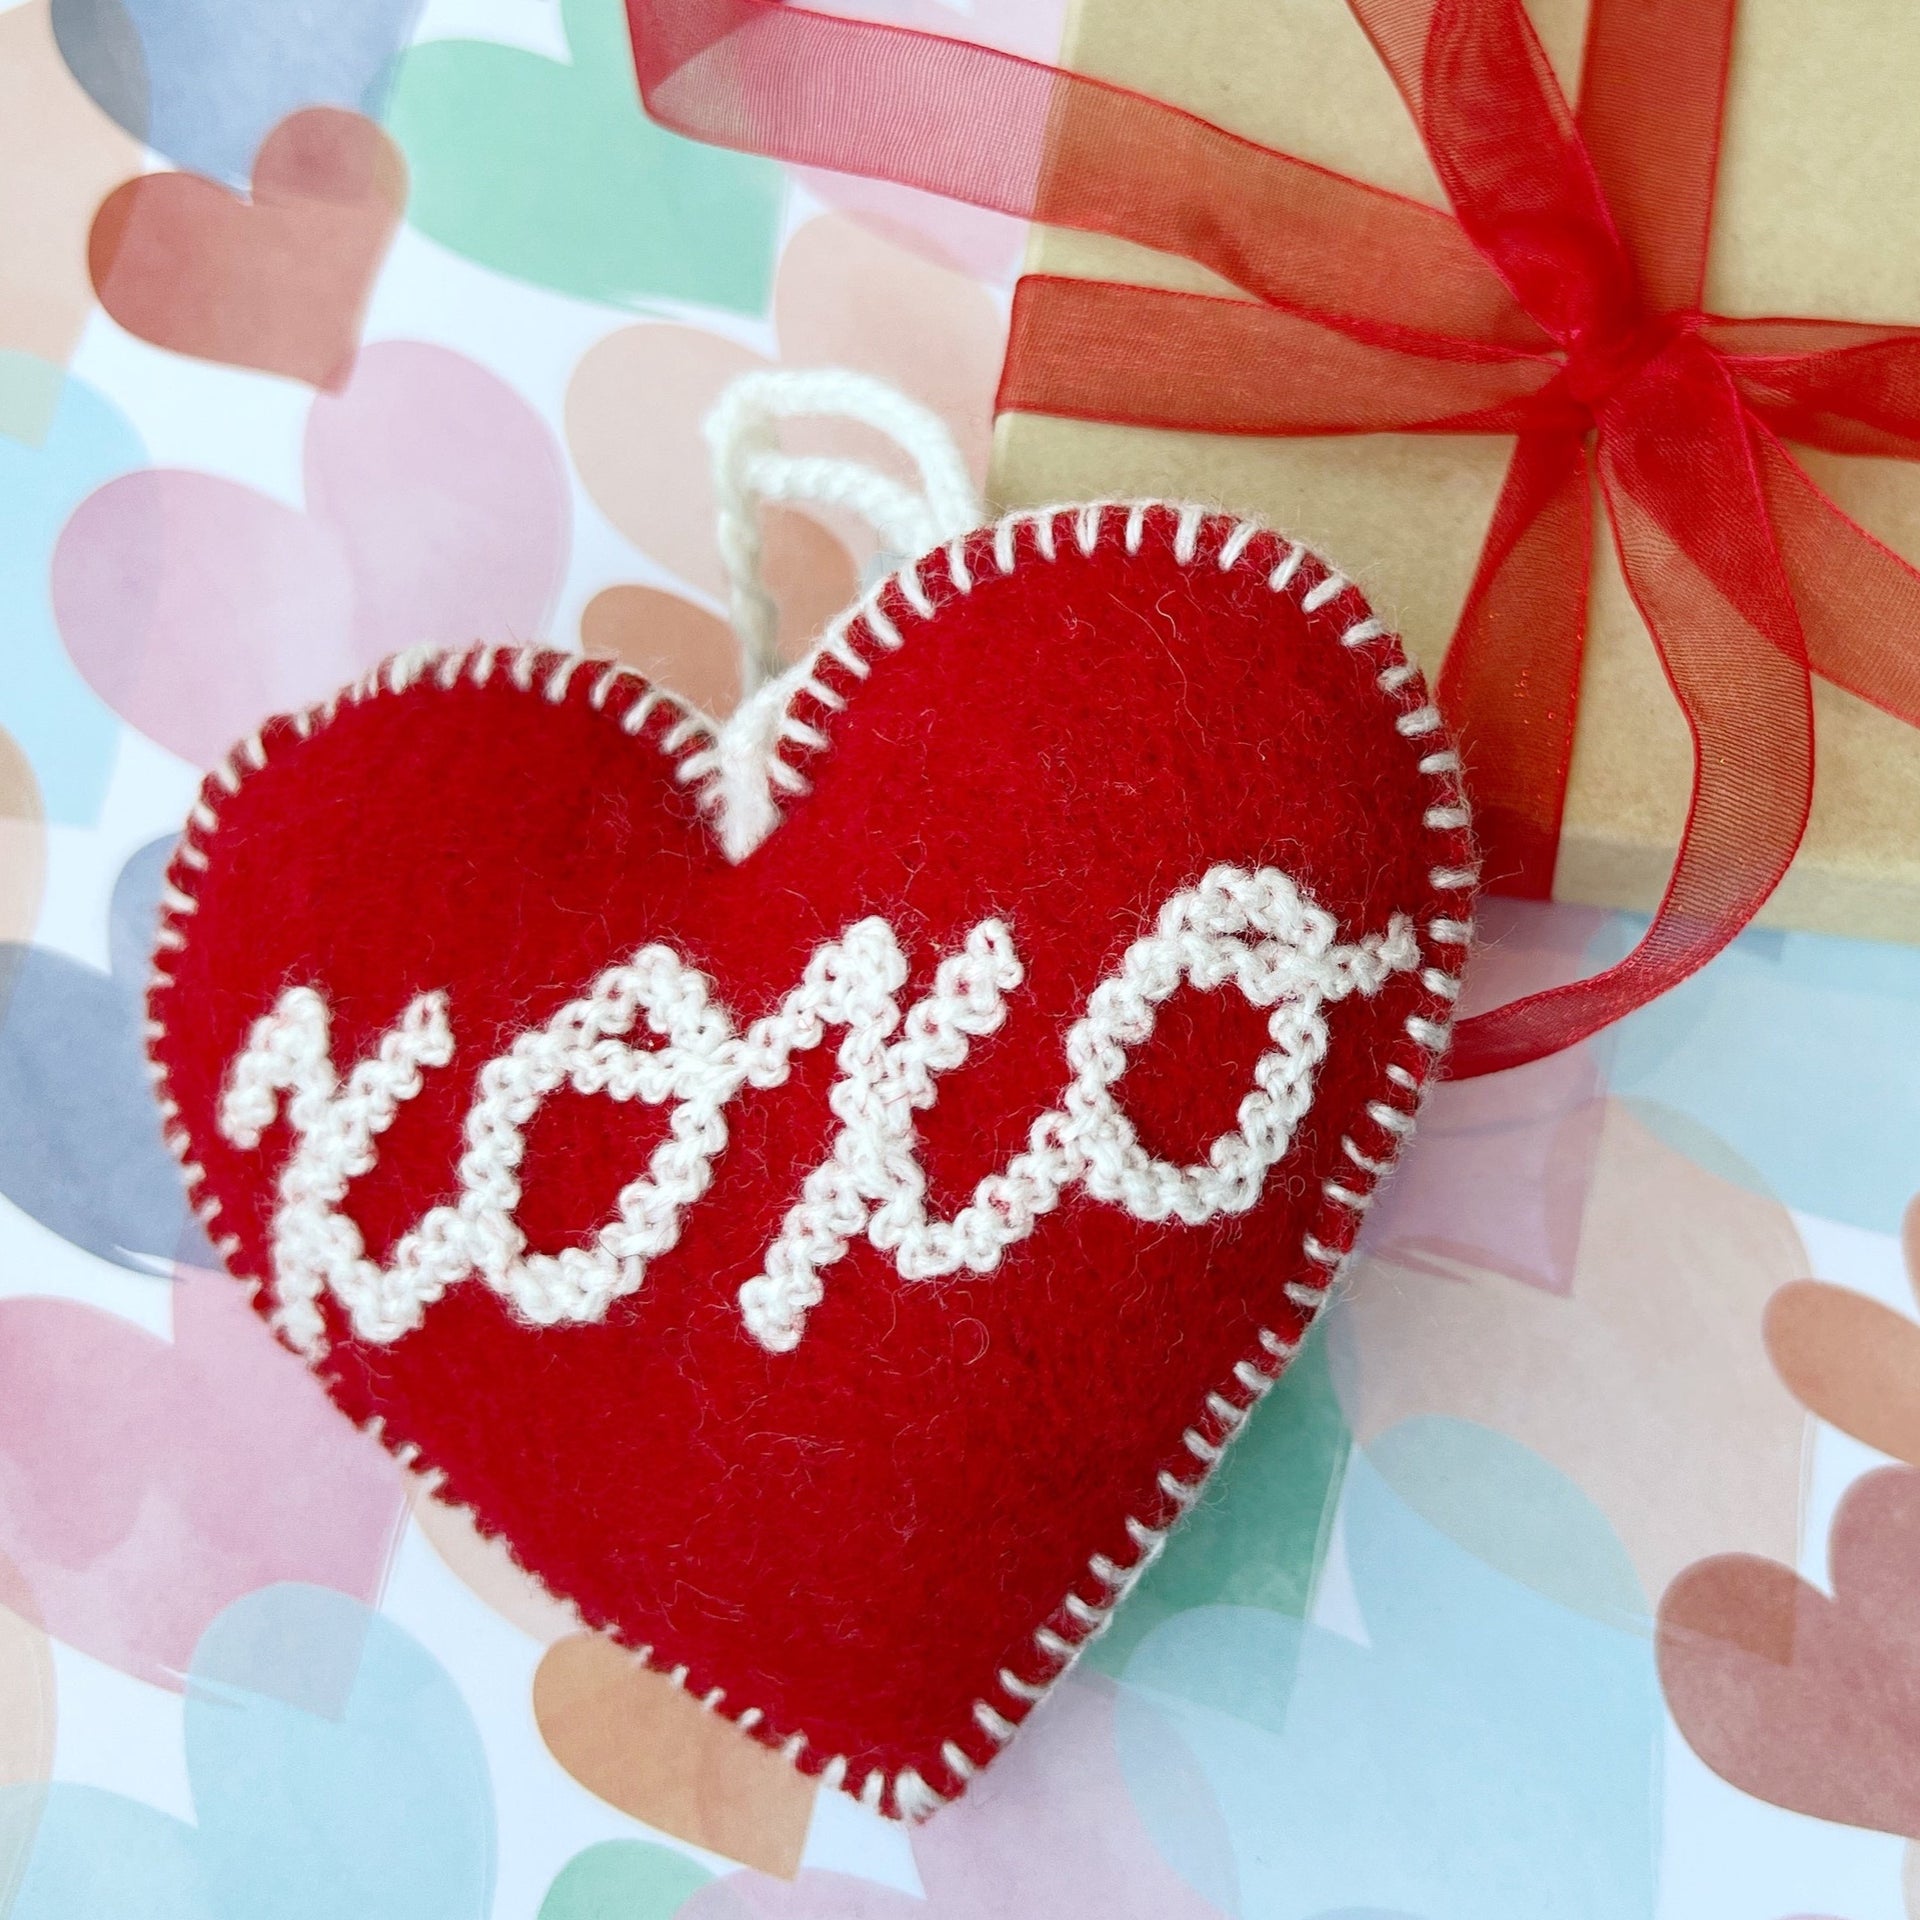 XOXO Valentine's Day Heart Ornament Fair Trade Handmade